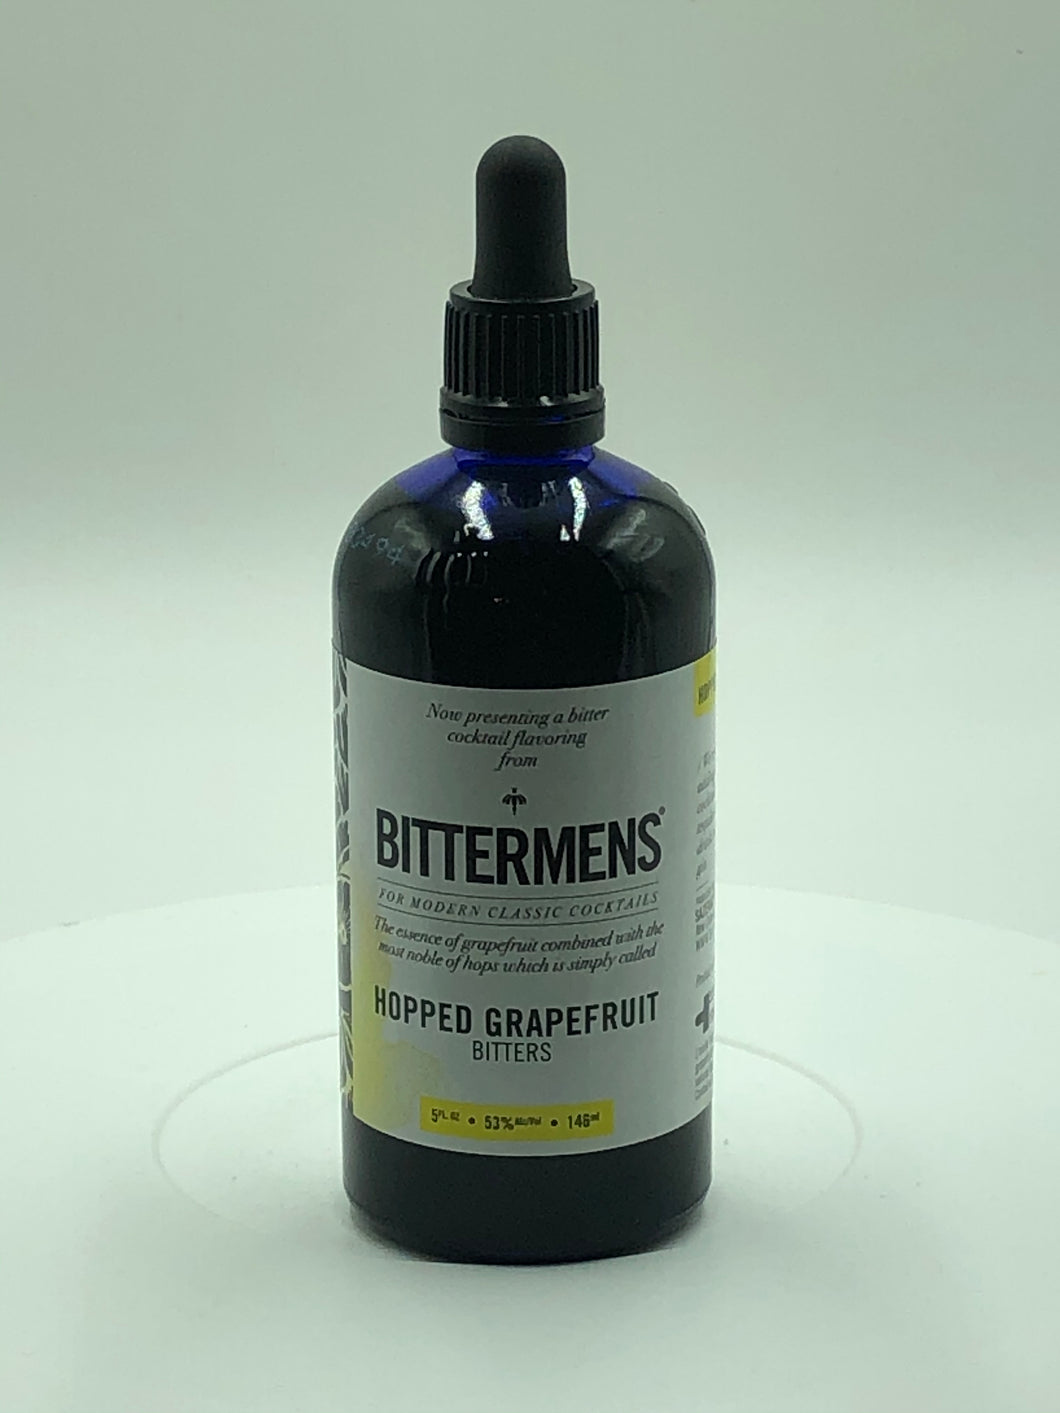 Bittermens ‘Hopped Grapefruit’ bitters